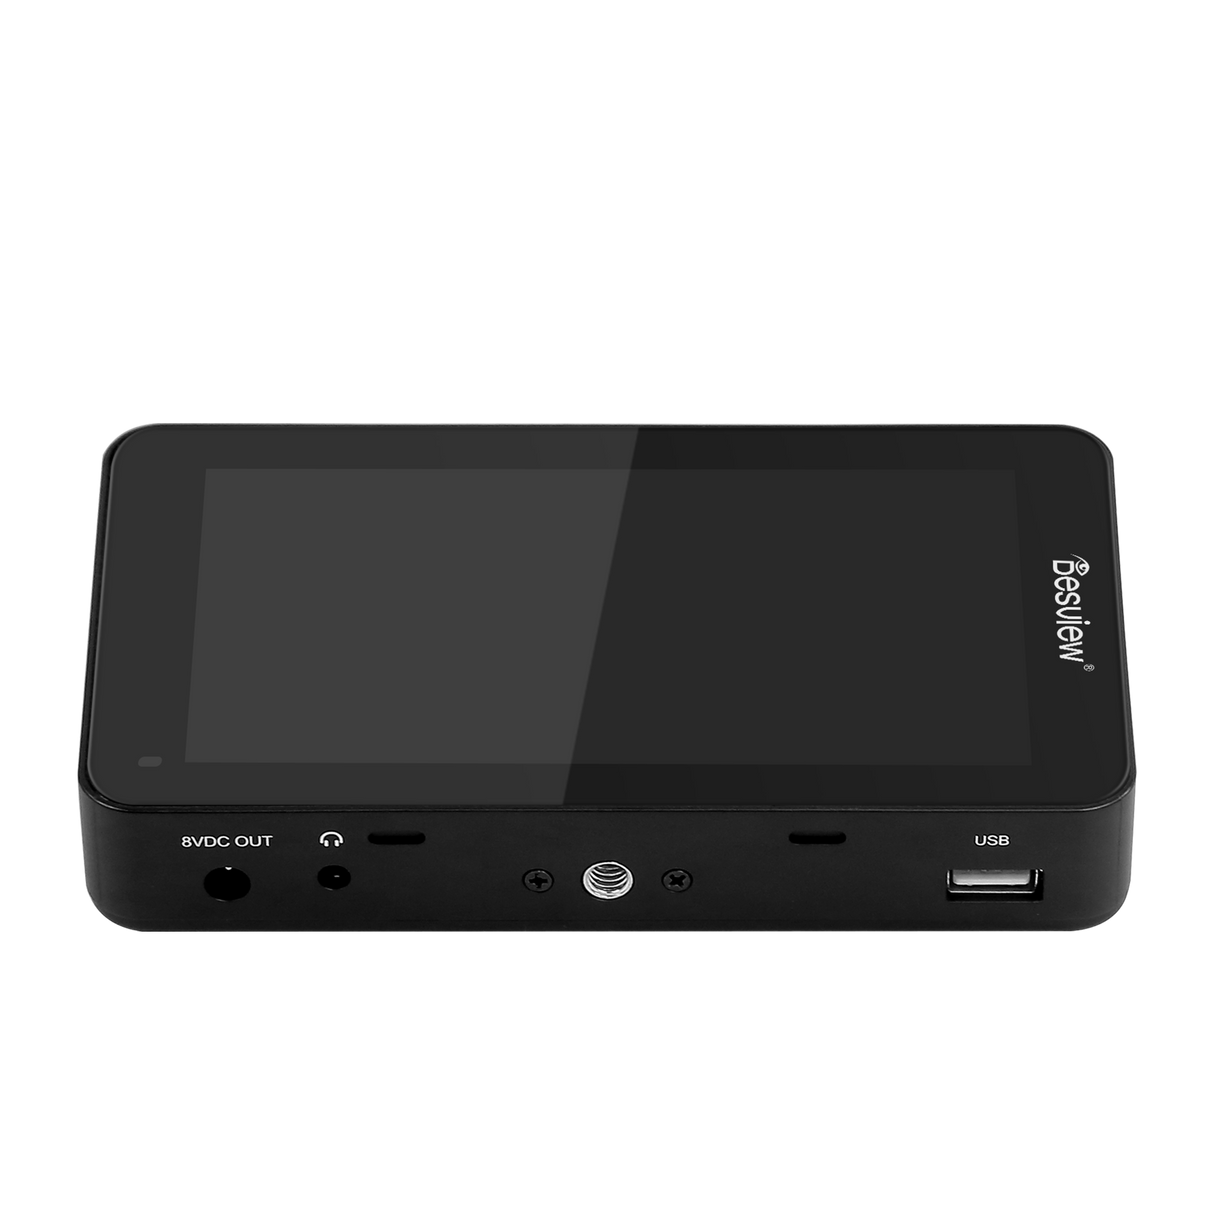 Desview monitor r6ii - 5.5"touchscreen monitor